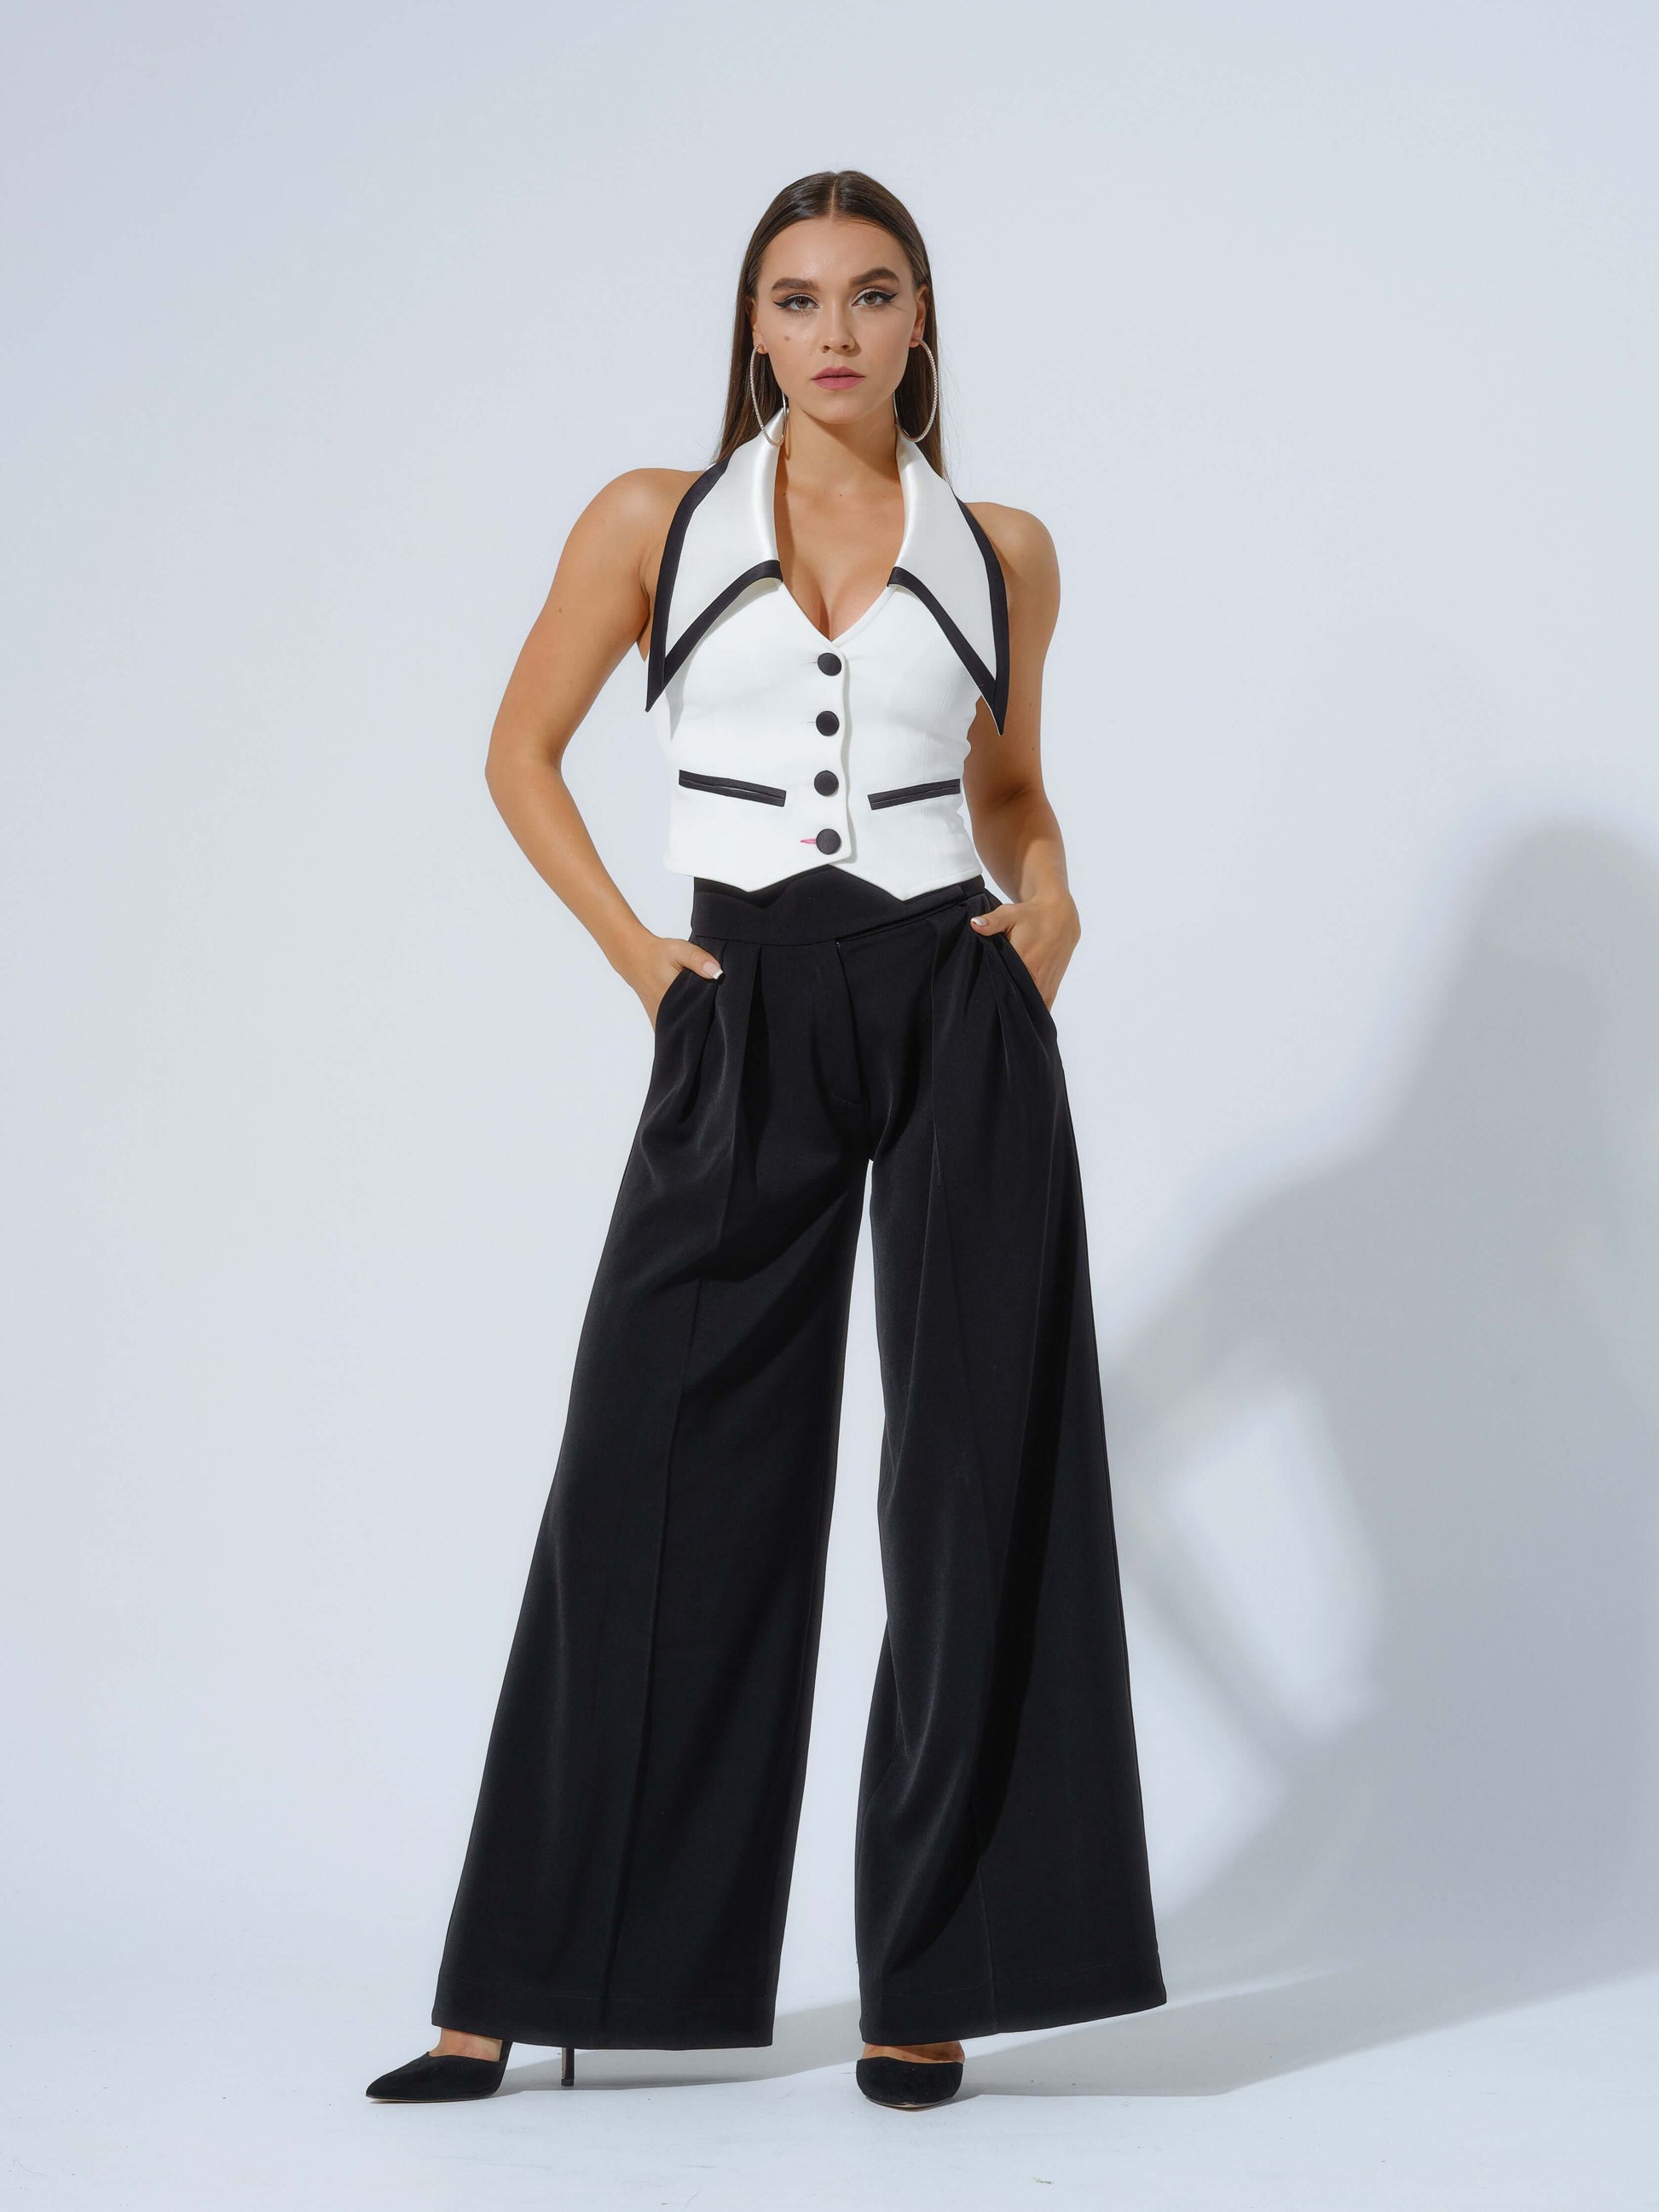 Born to Run Waistcoat & Trousers Set by Tia Dorraine Women's Luxury Fashion Designer Clothing Brand